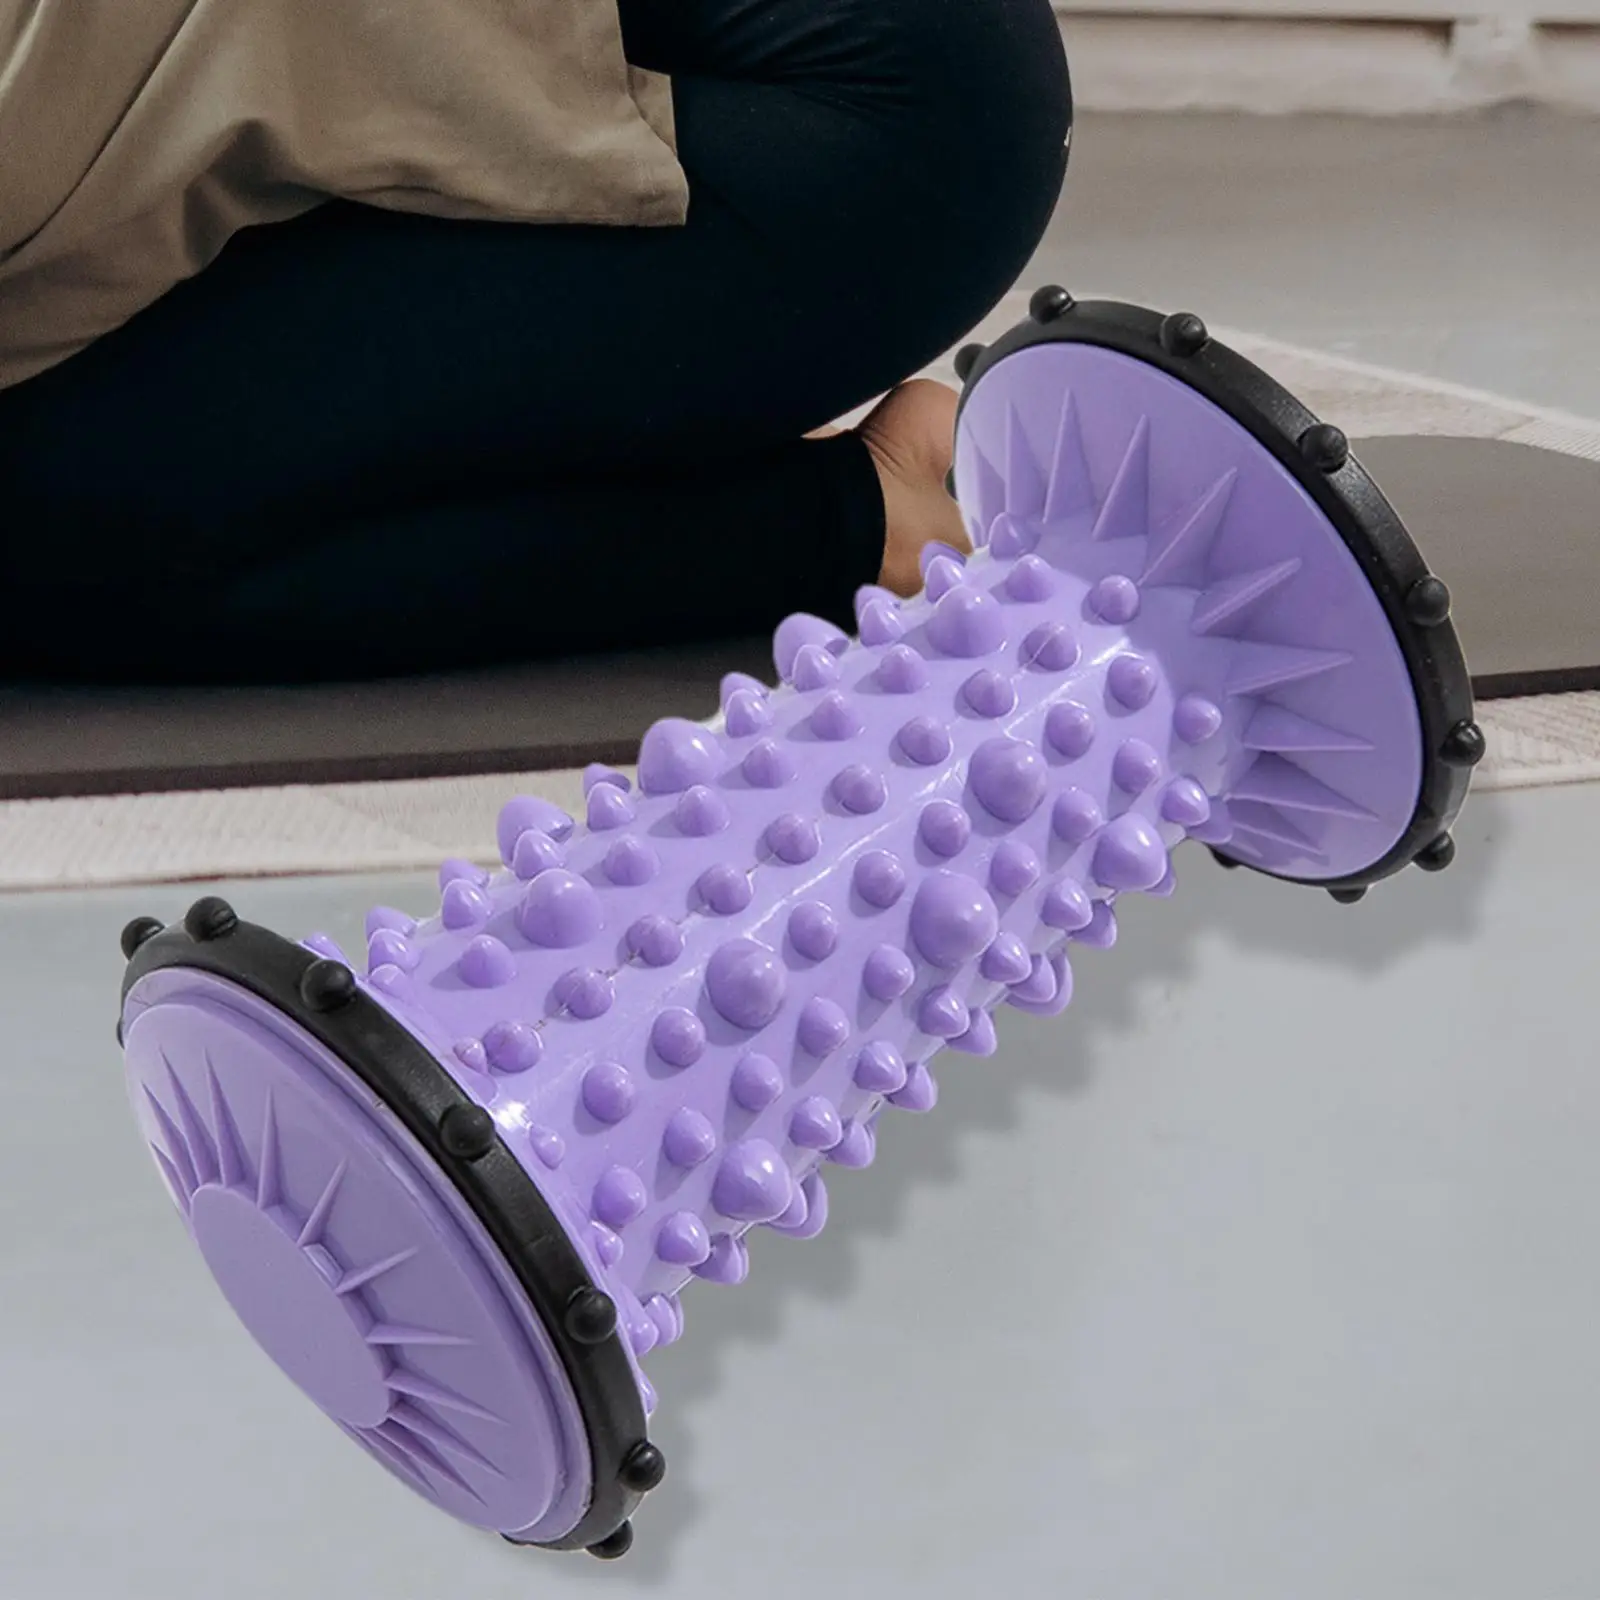 Foot Roller Durable Foot Massager Multifunctional Comfortable Foot Massage Roller for Heel Leg Hands Shoulder Feet Soles